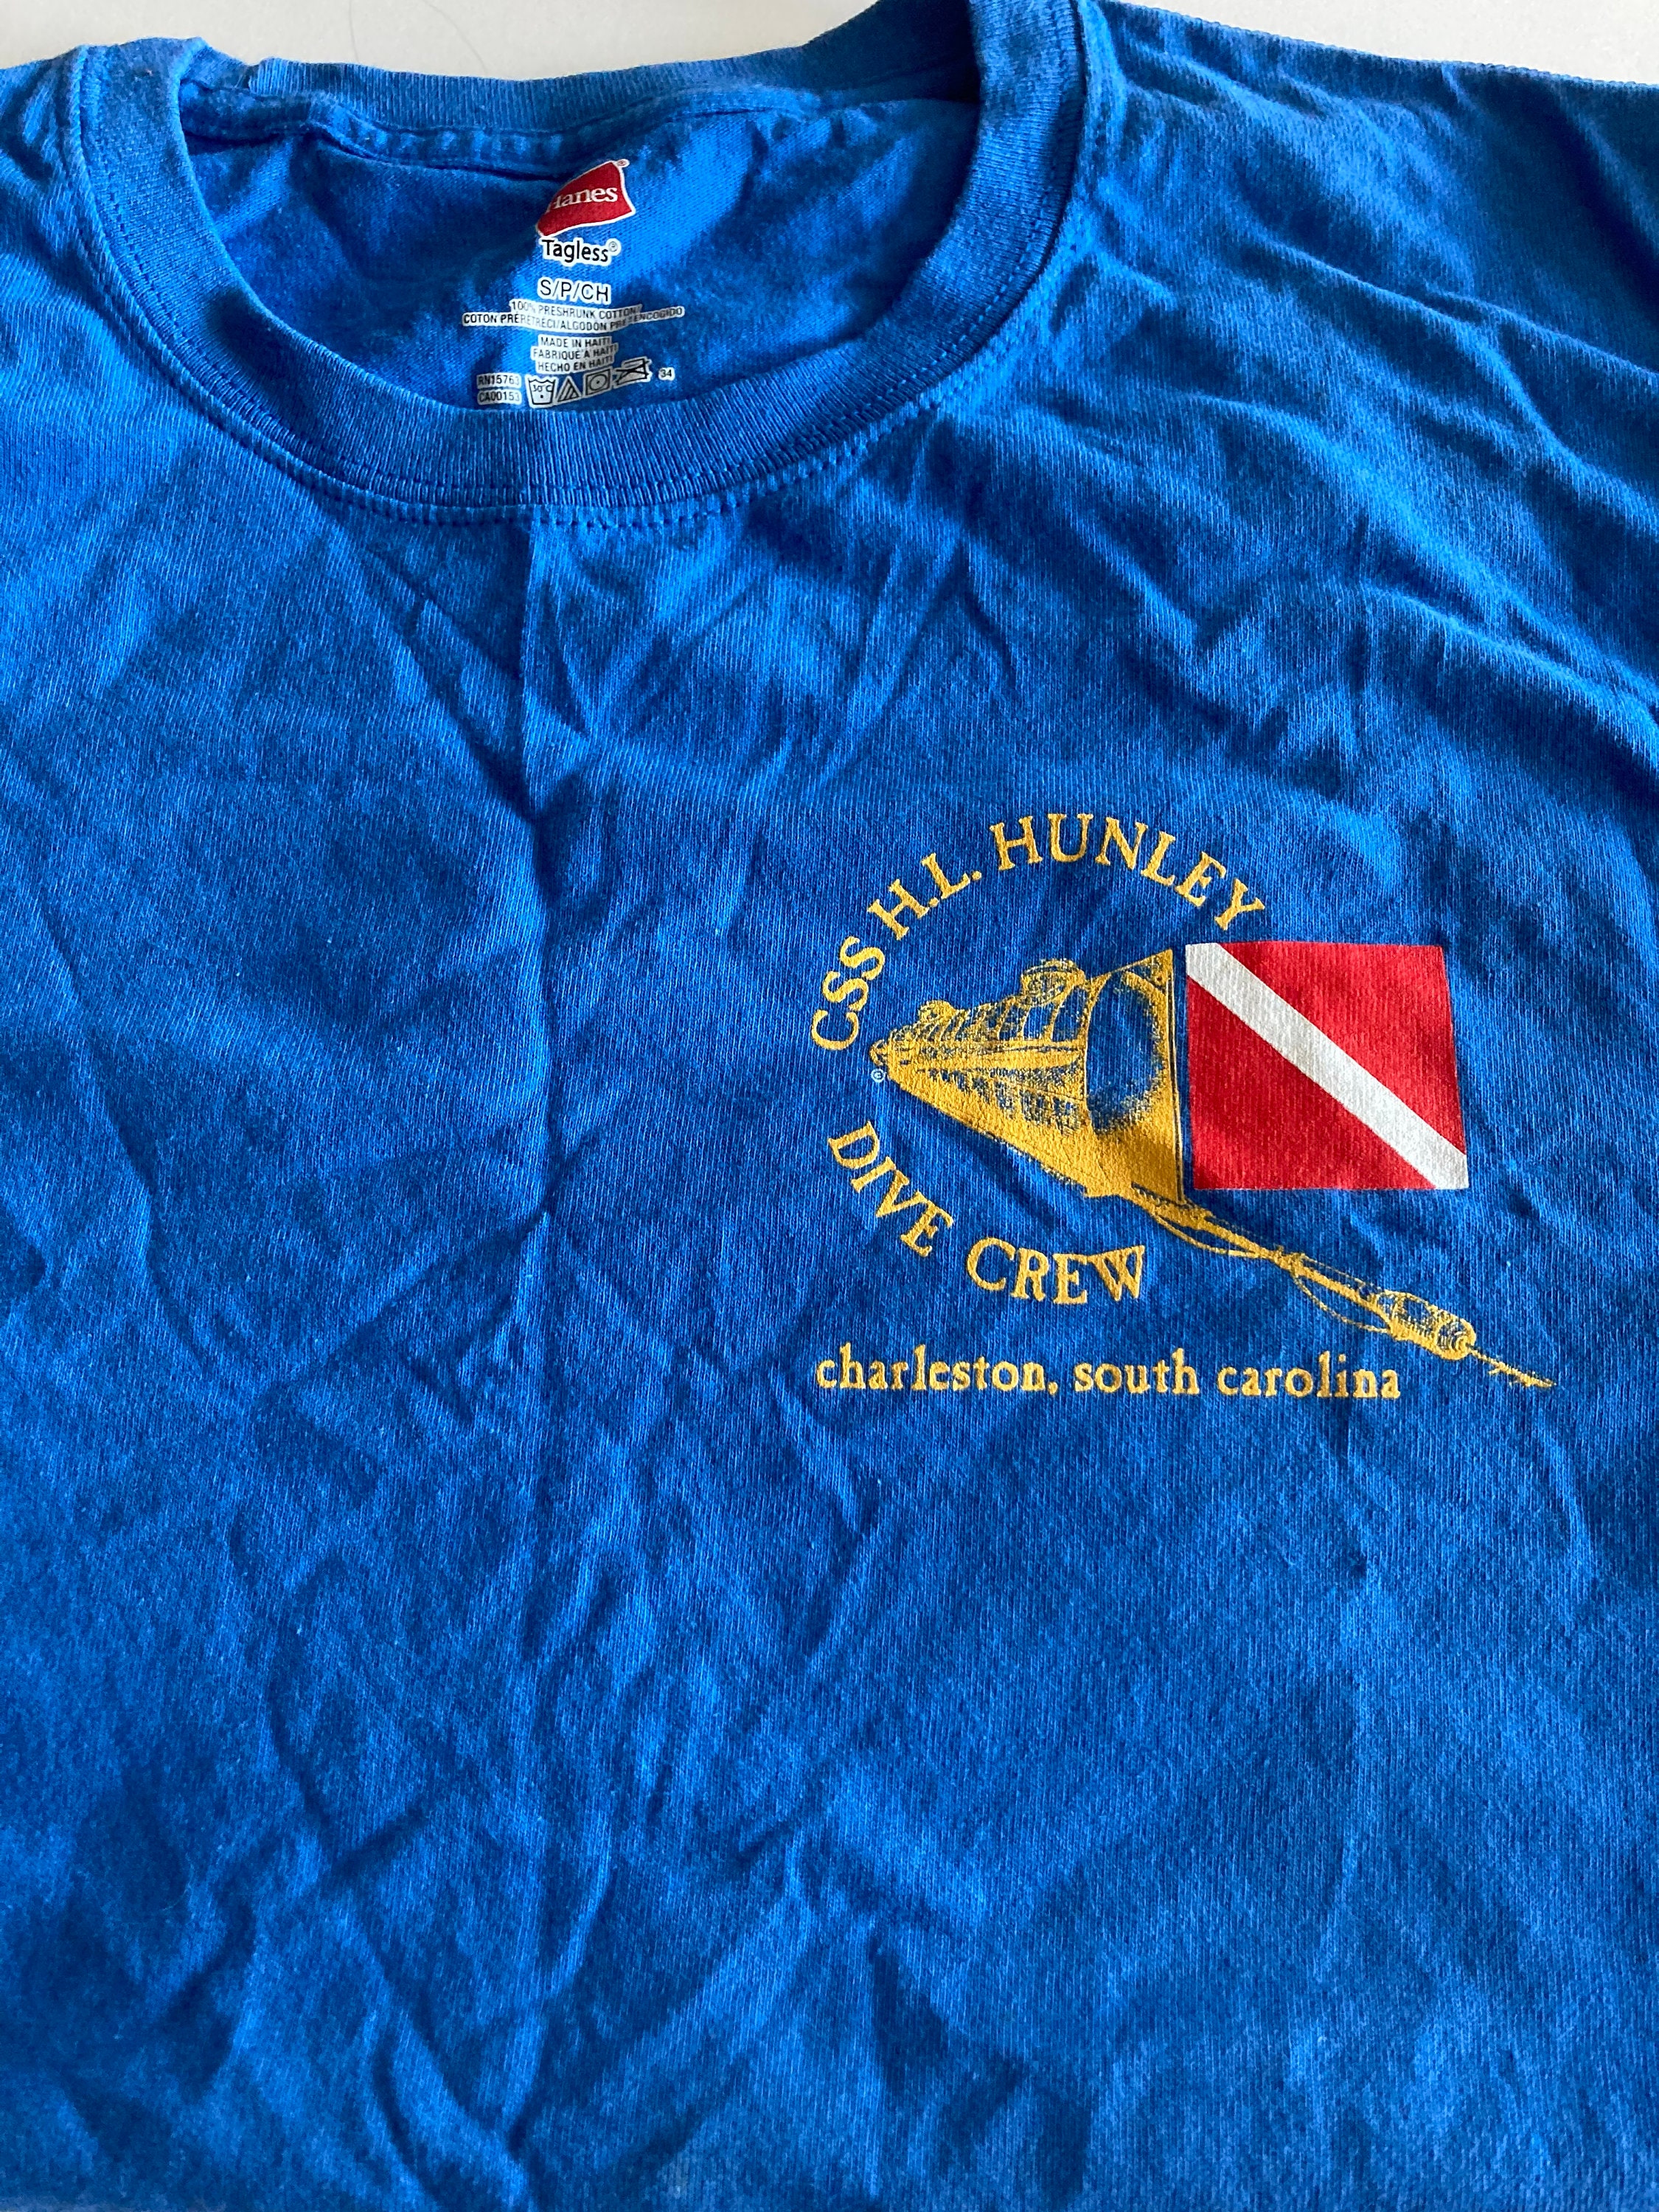 CSS HL Hunley Dive Crew Charleston SC Small T-shirt Submarine Civil War  Bright Blue Dive Shirt -  Canada